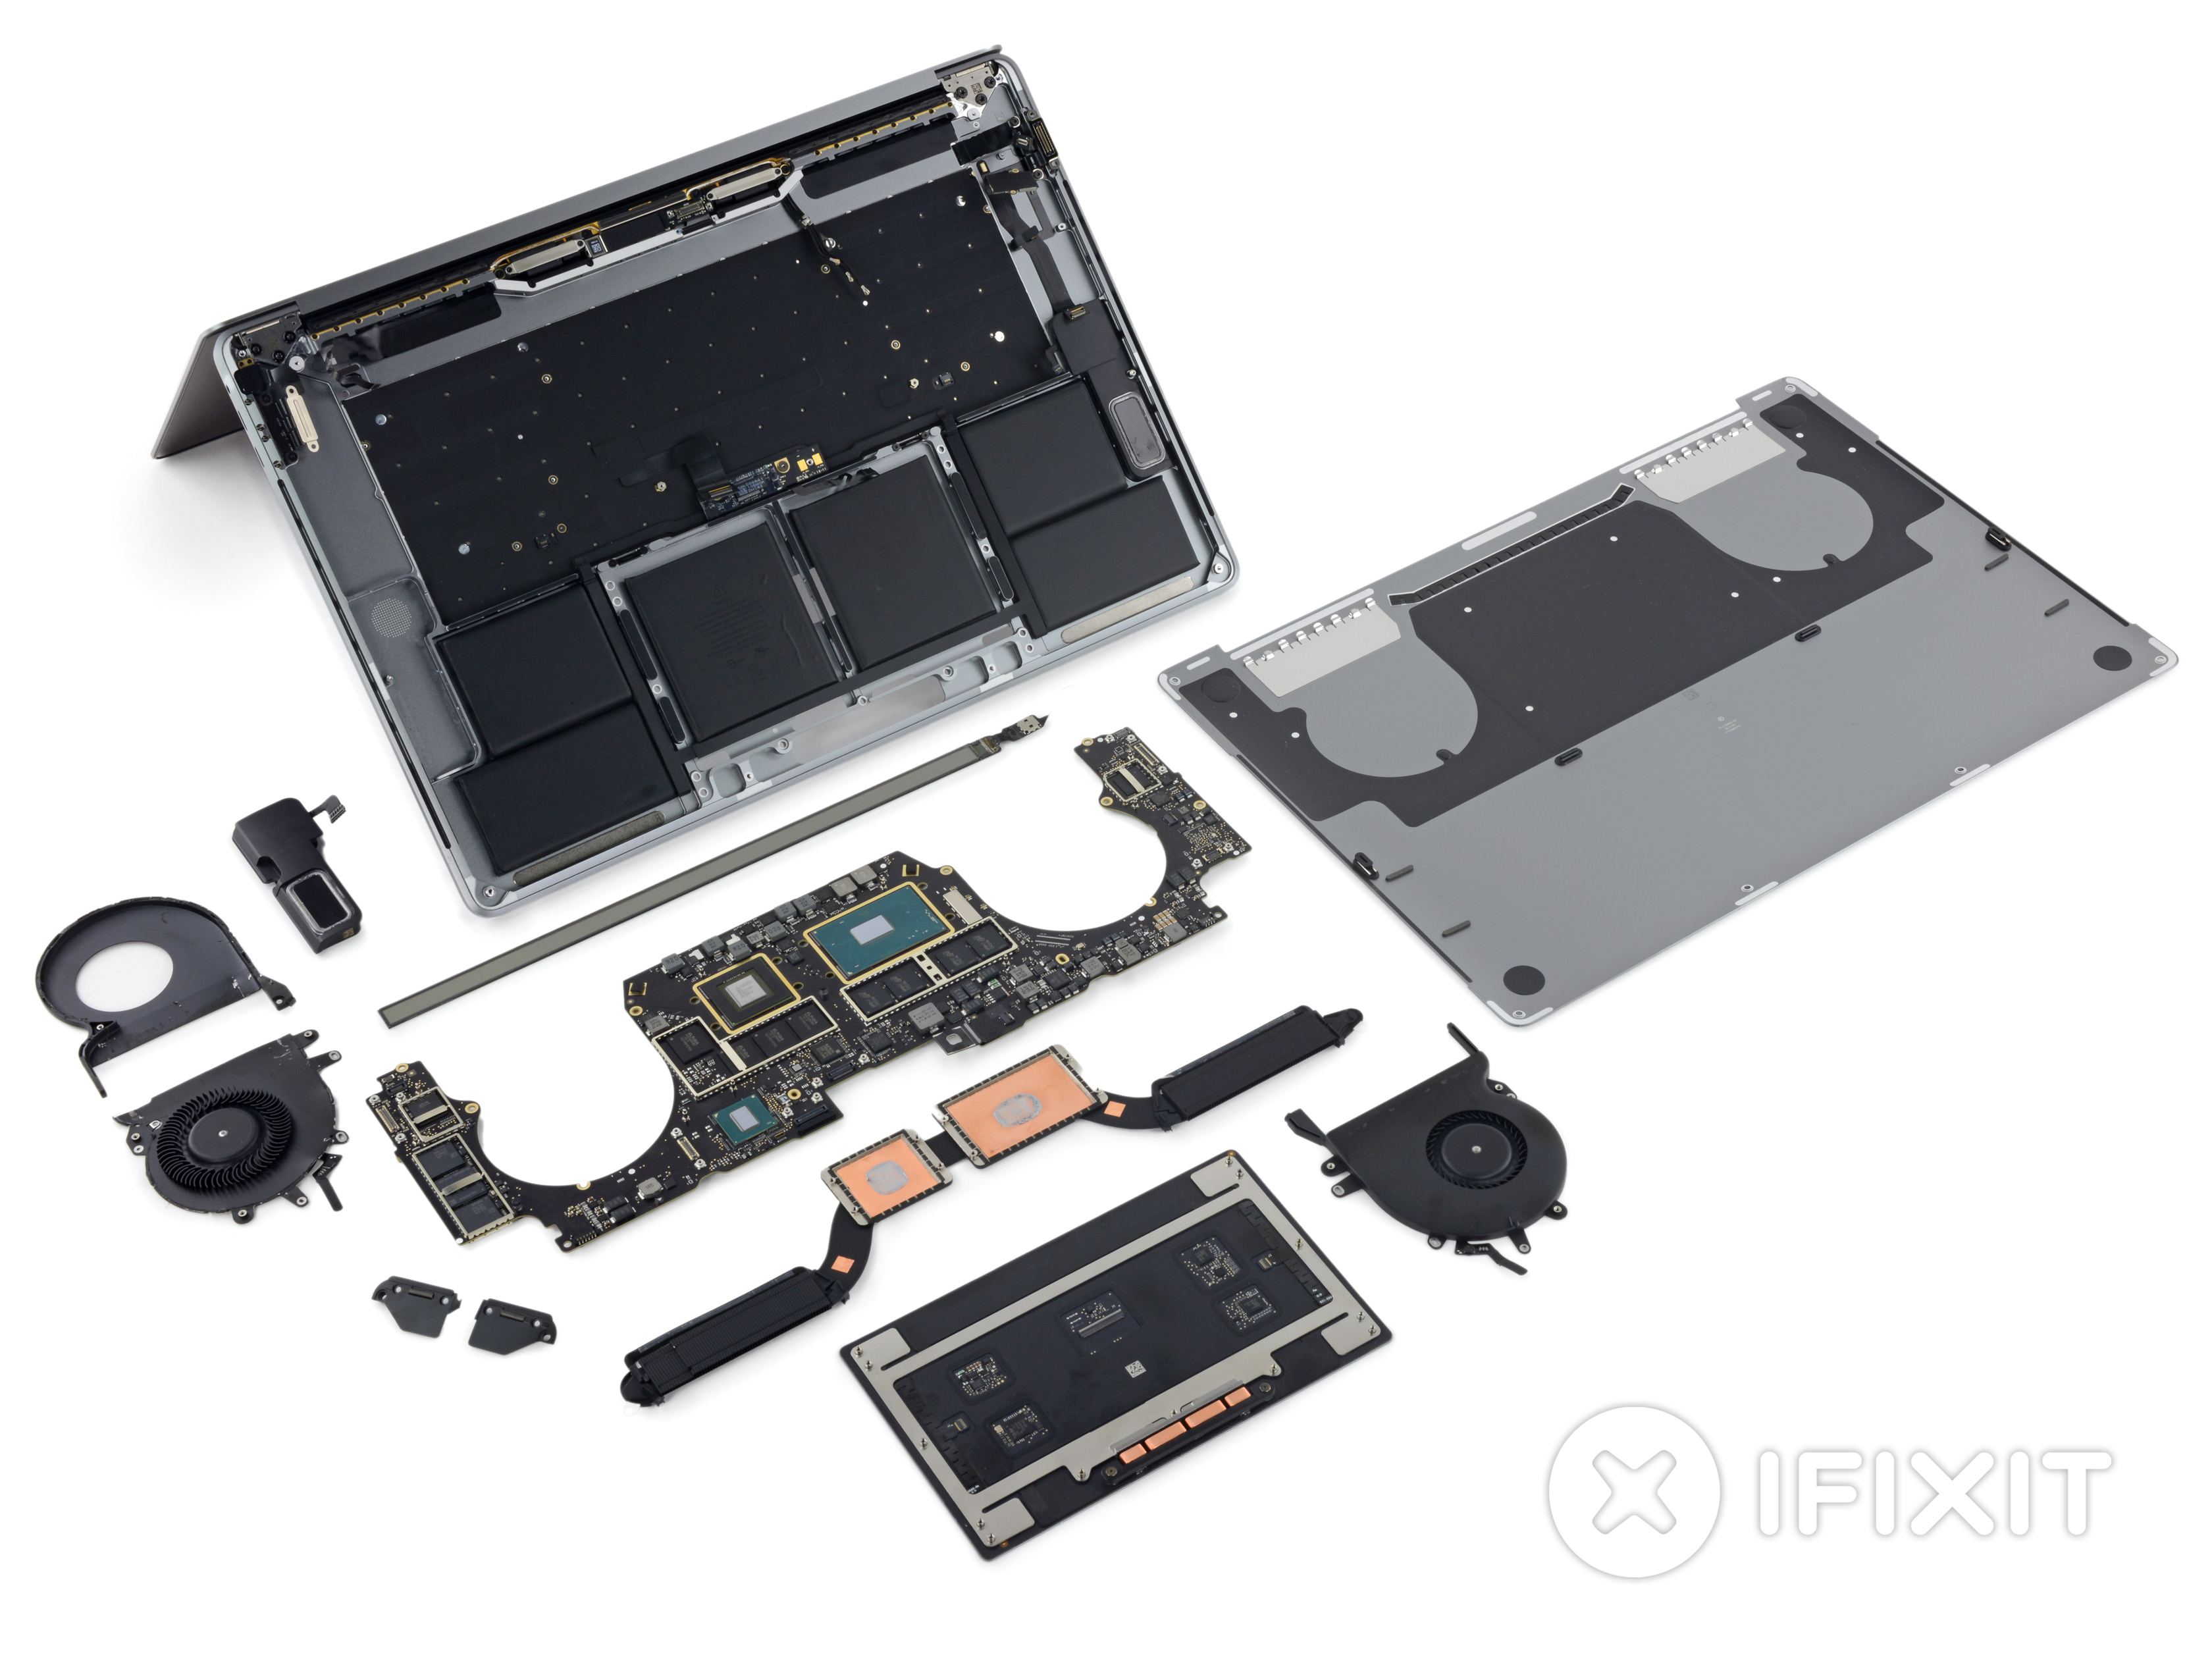 Desmonte do MacBook Pro de 15" pelo iFixit